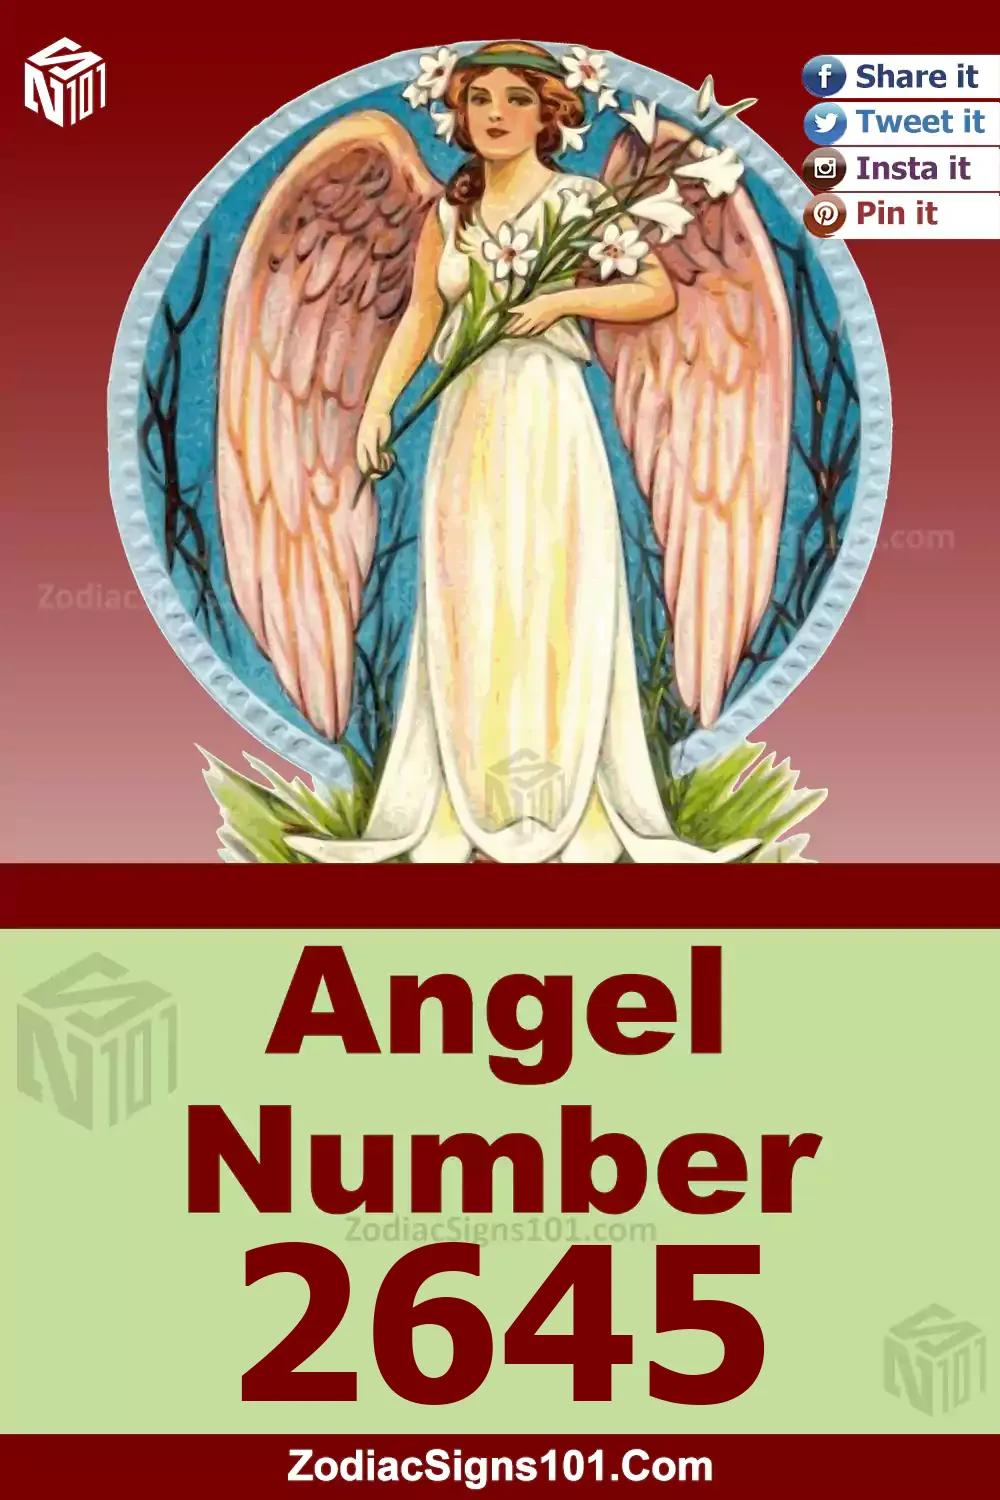 2645-Angel-Number-Meaning.jpg